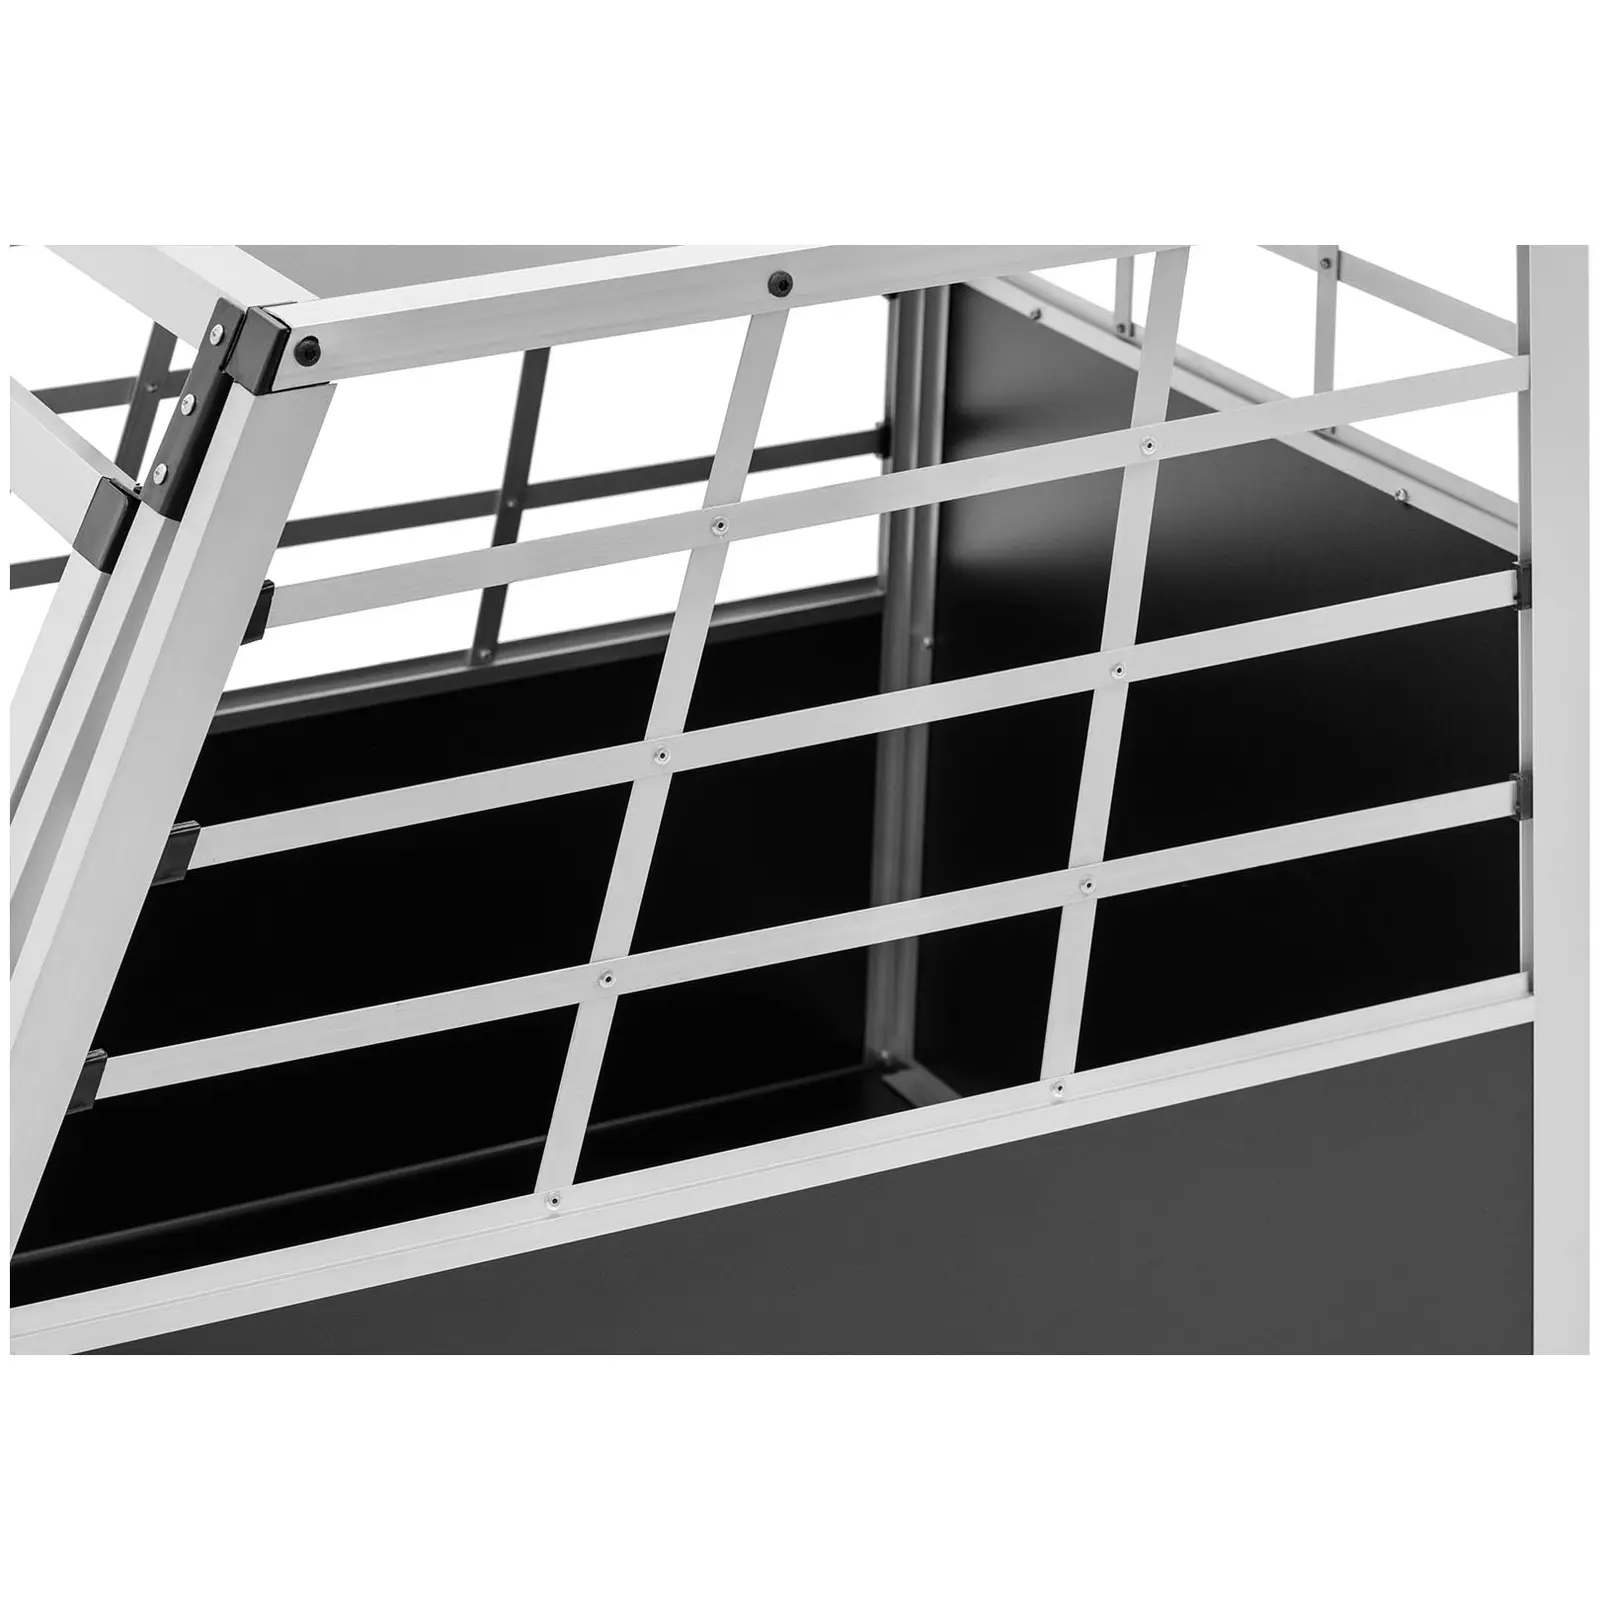 Hundetransportbox - Aluminium - Trapezform - 91 x 65 x 70 cm